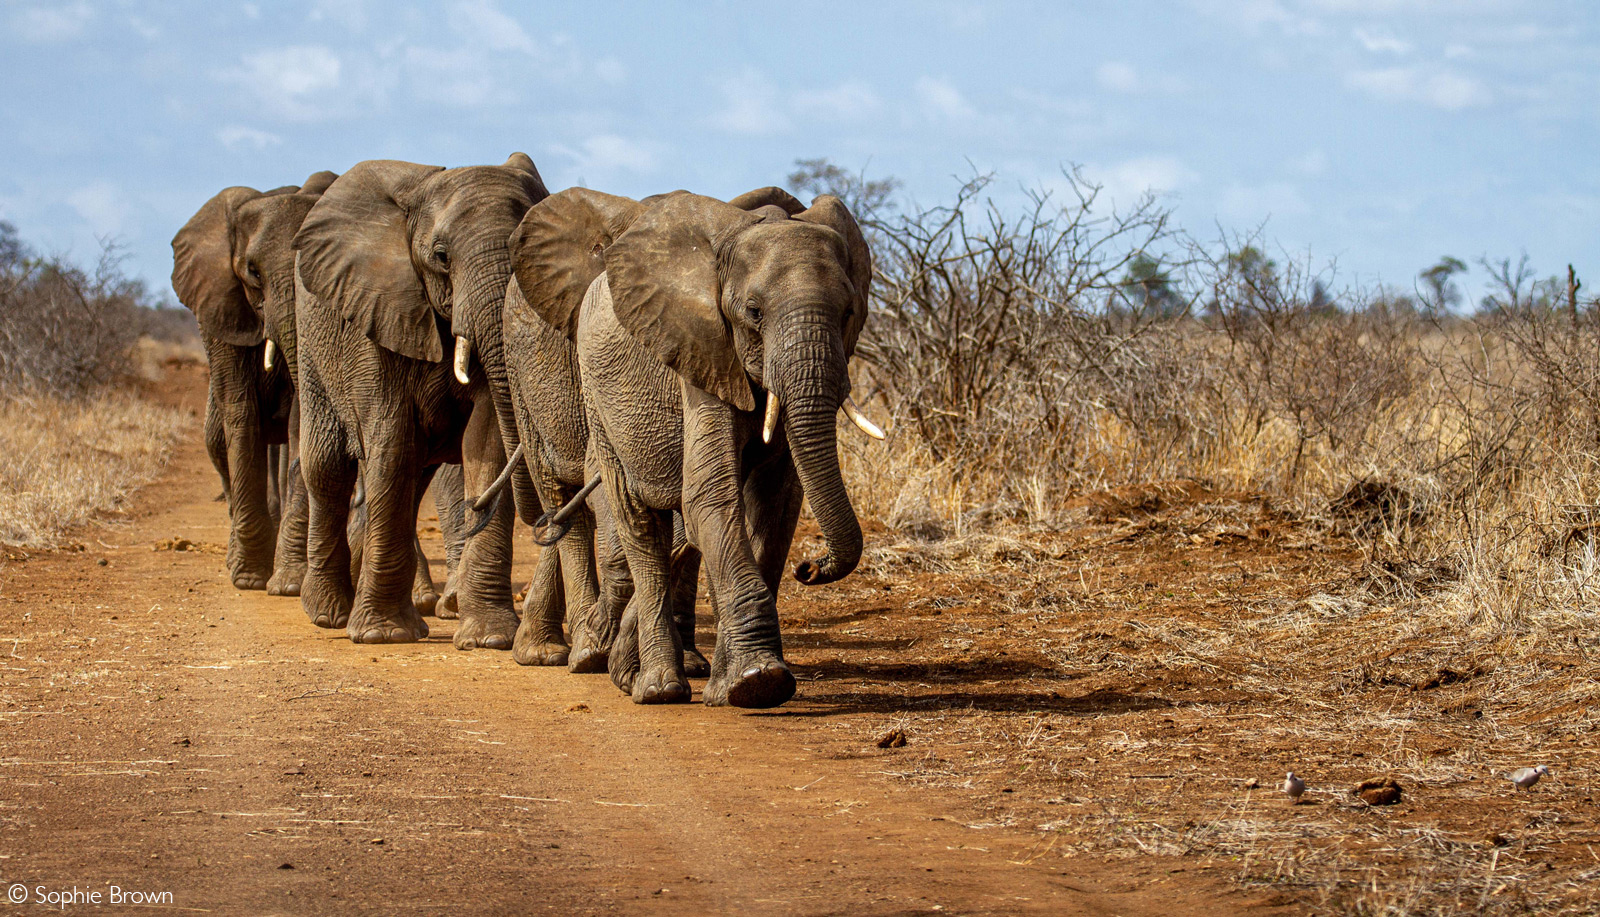 Elephants heading towards water. Kruger National Park, South Africa © Sophie Brown